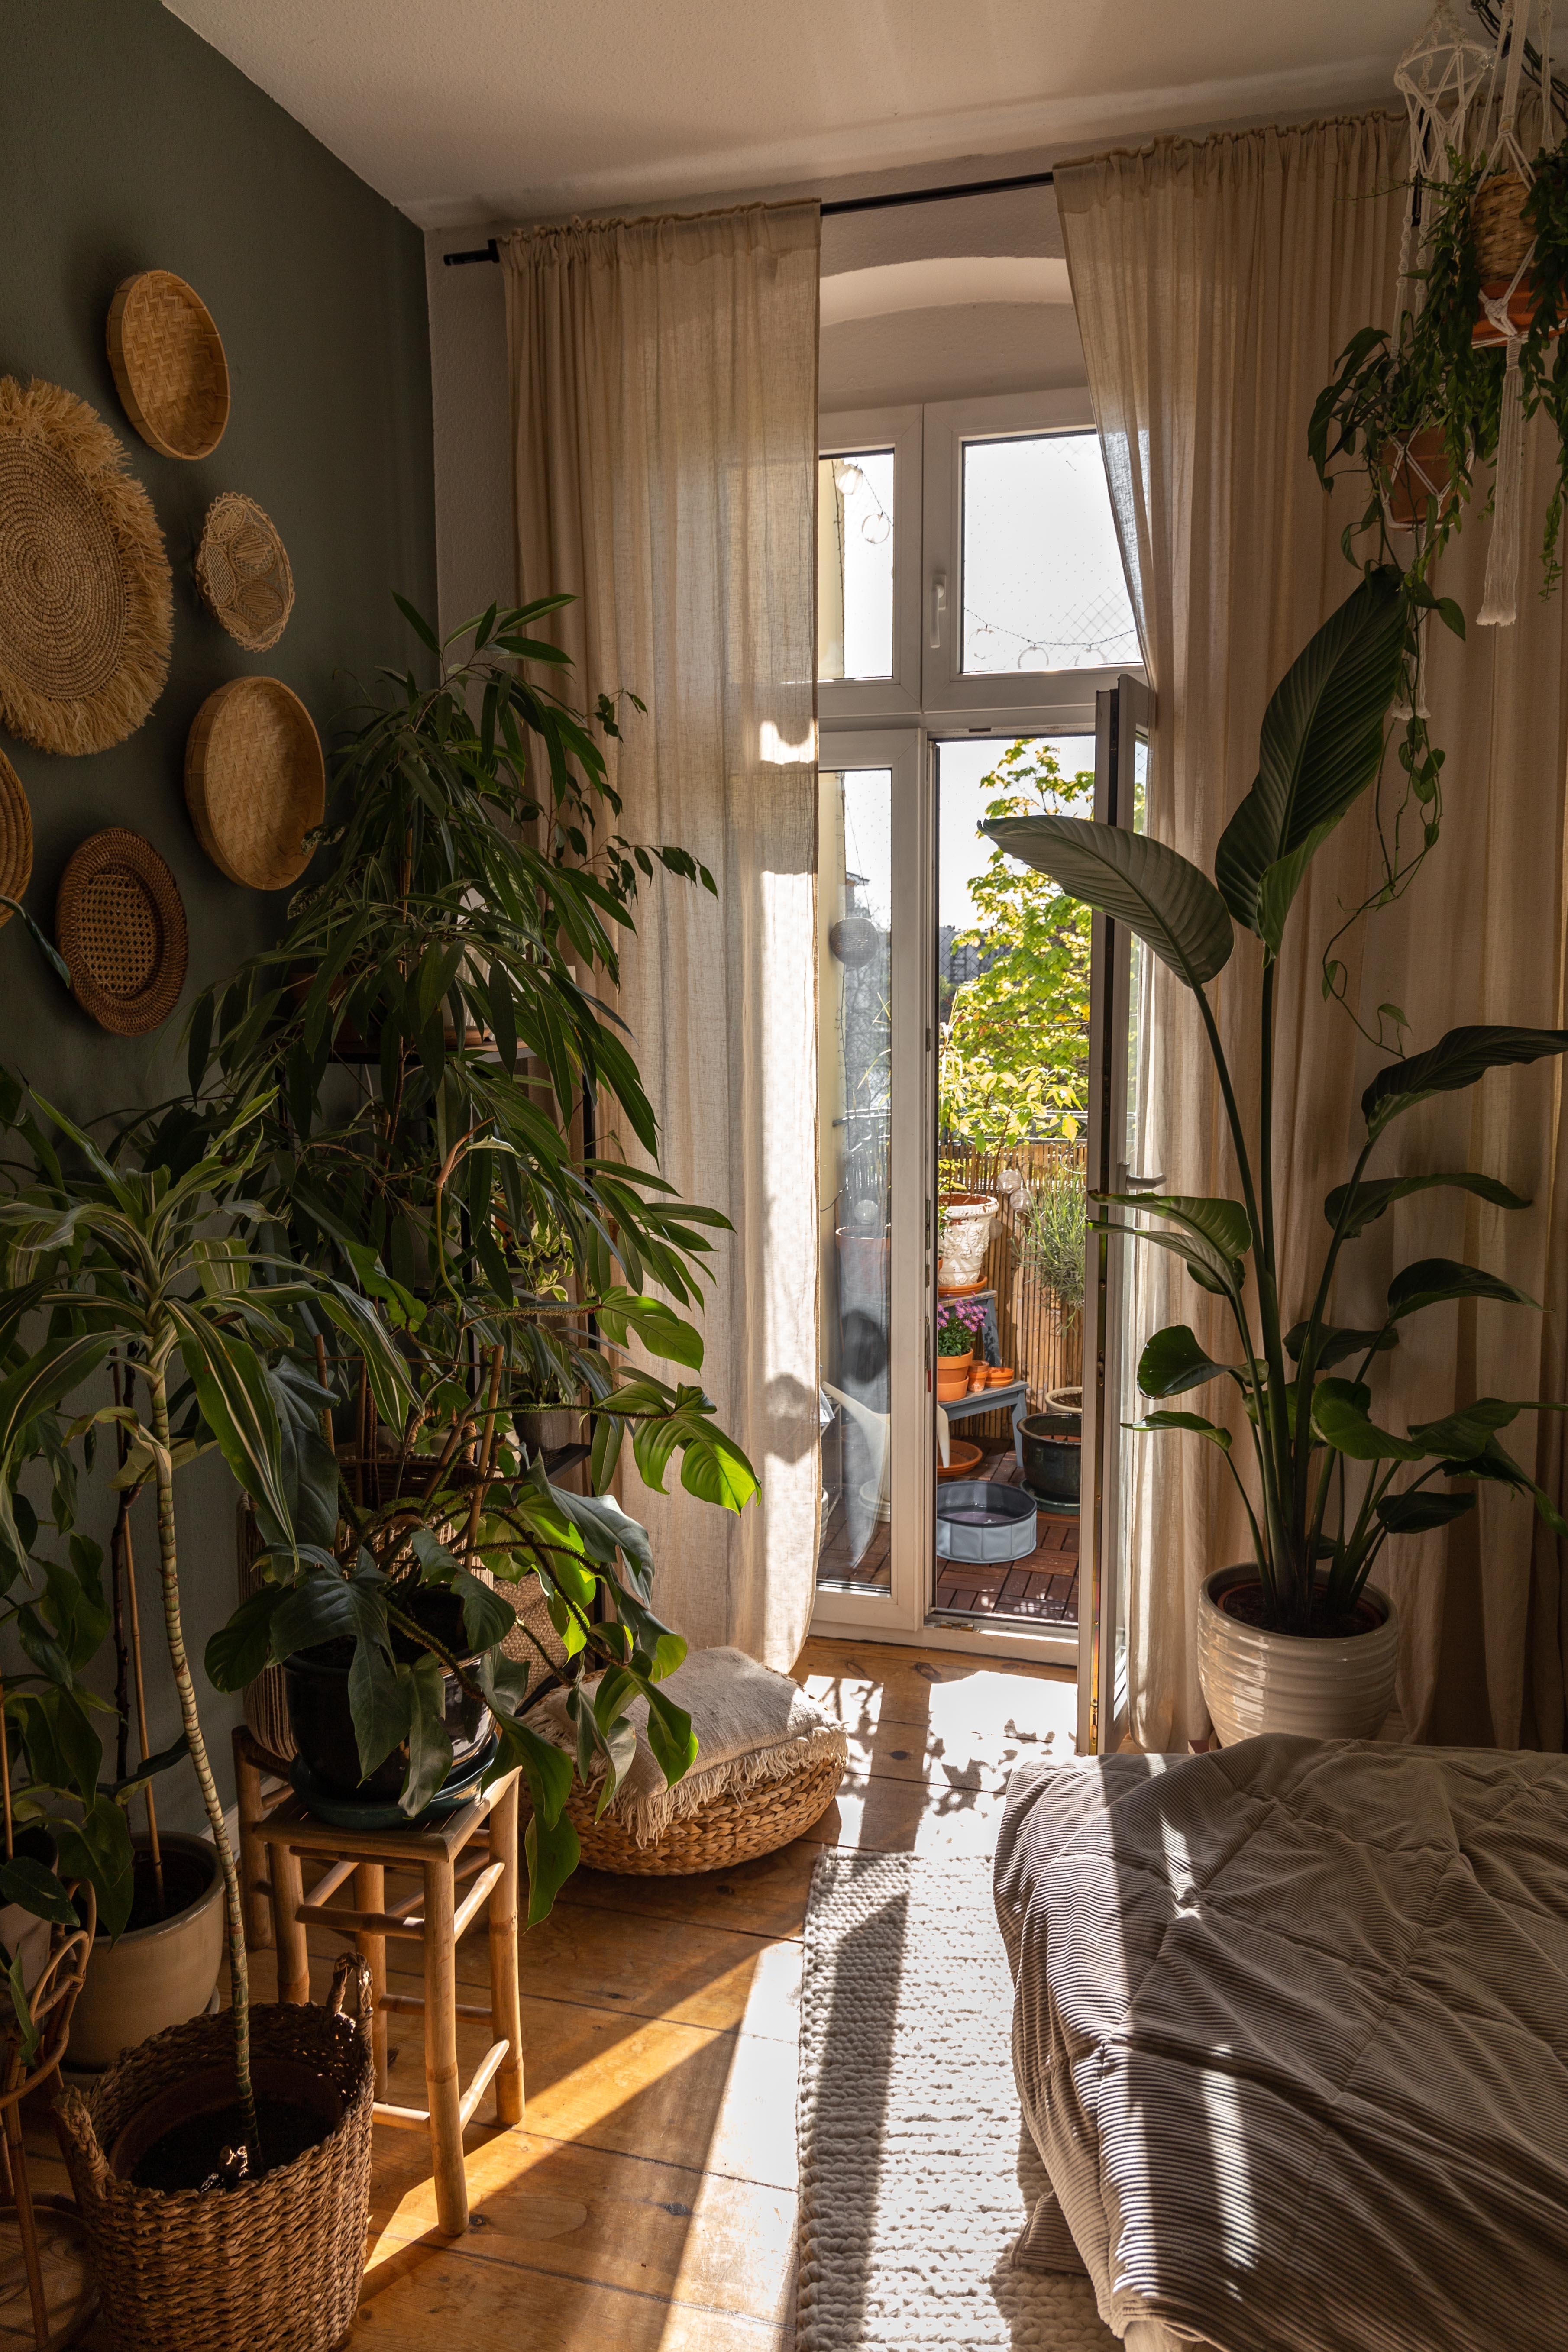 #urbanjungle #livingroom #livingroominspo #houseplants #altbauliebe #einrichtung #interiorinspiration #interiordesign 